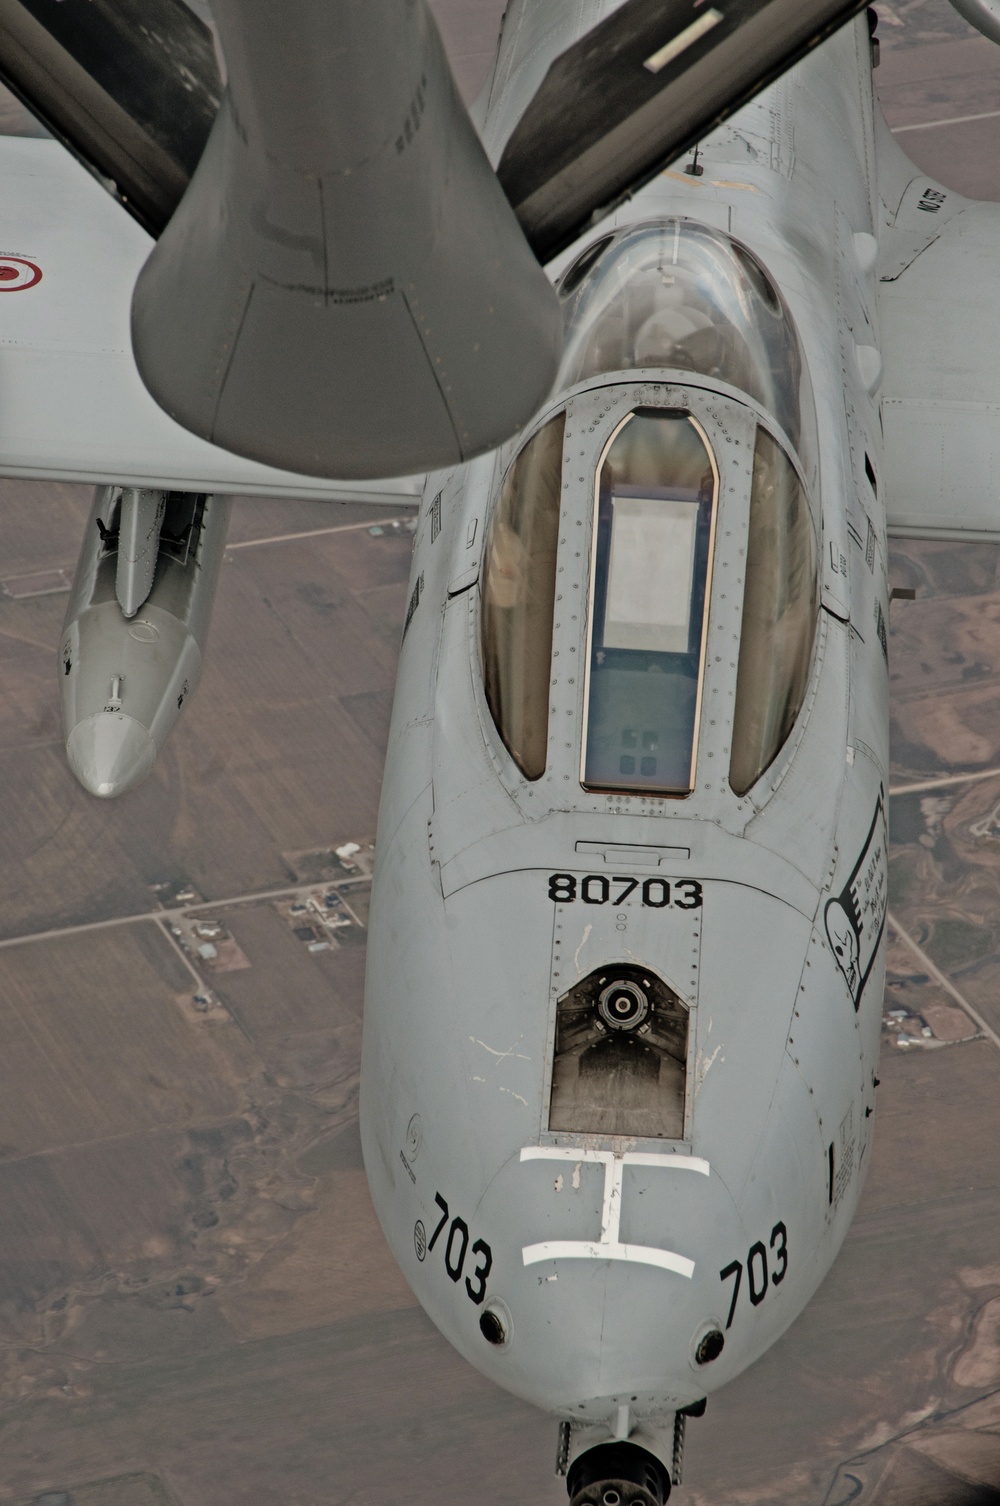 KC-135s refuel Idaho's A-10s in mid-flight